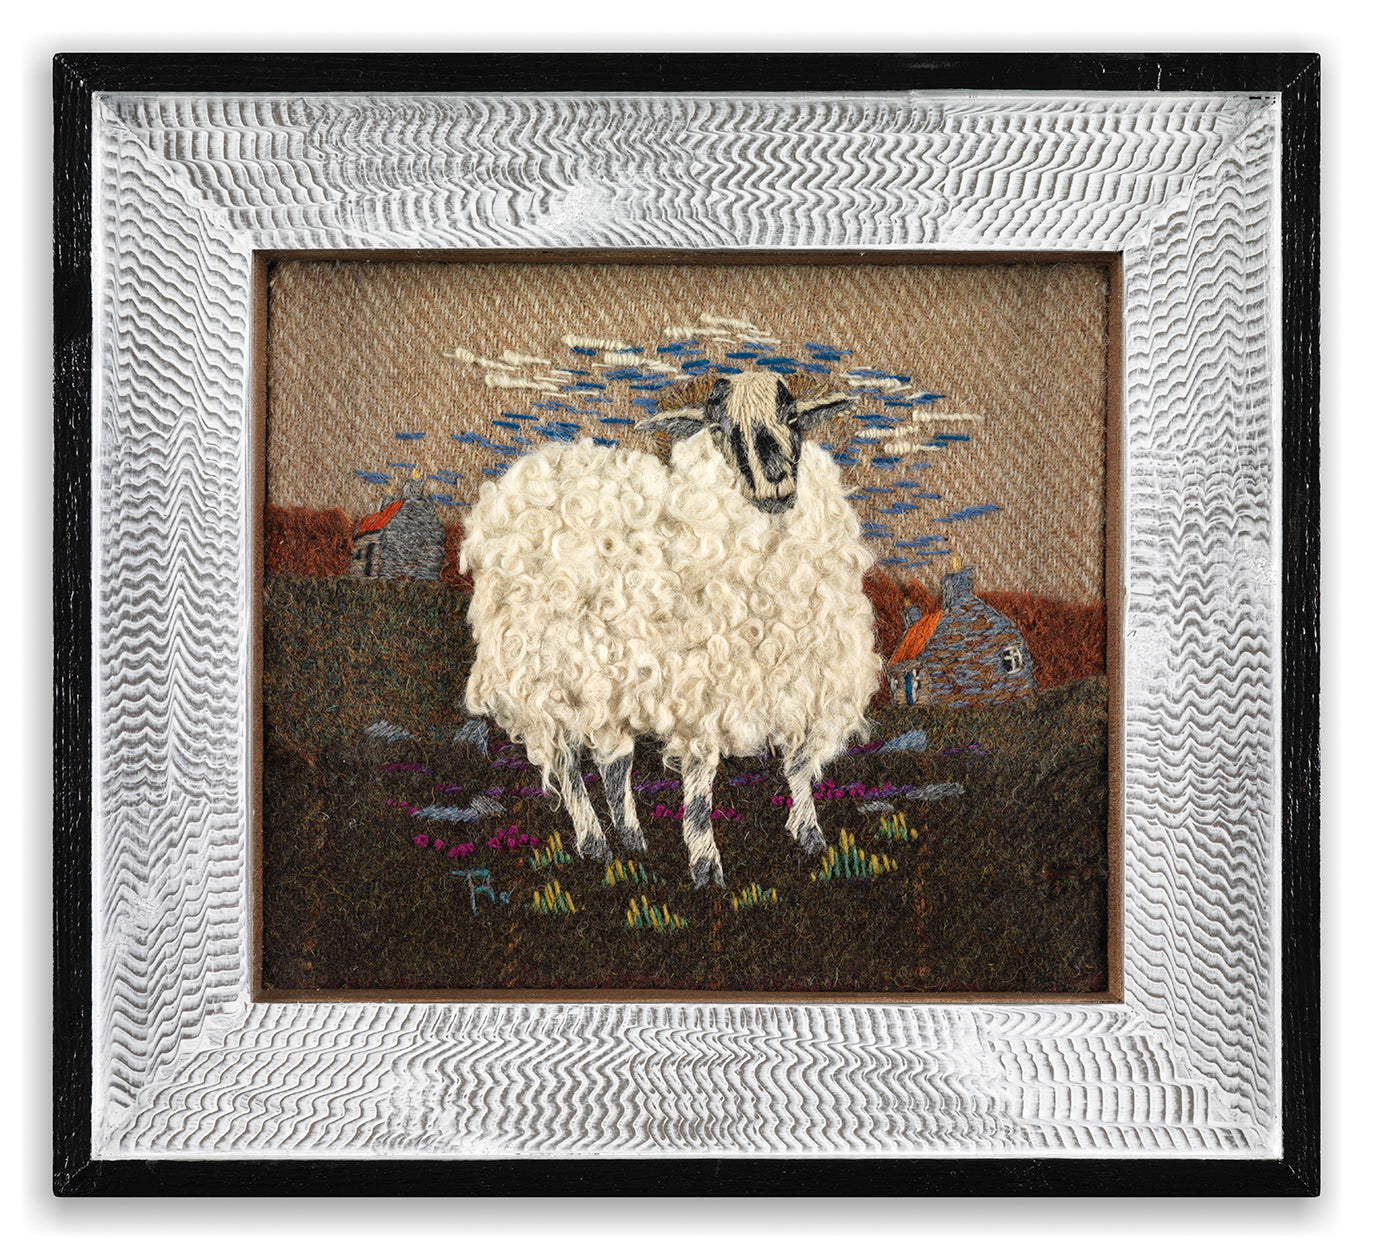 Ewe and Shielings in Raw Wool